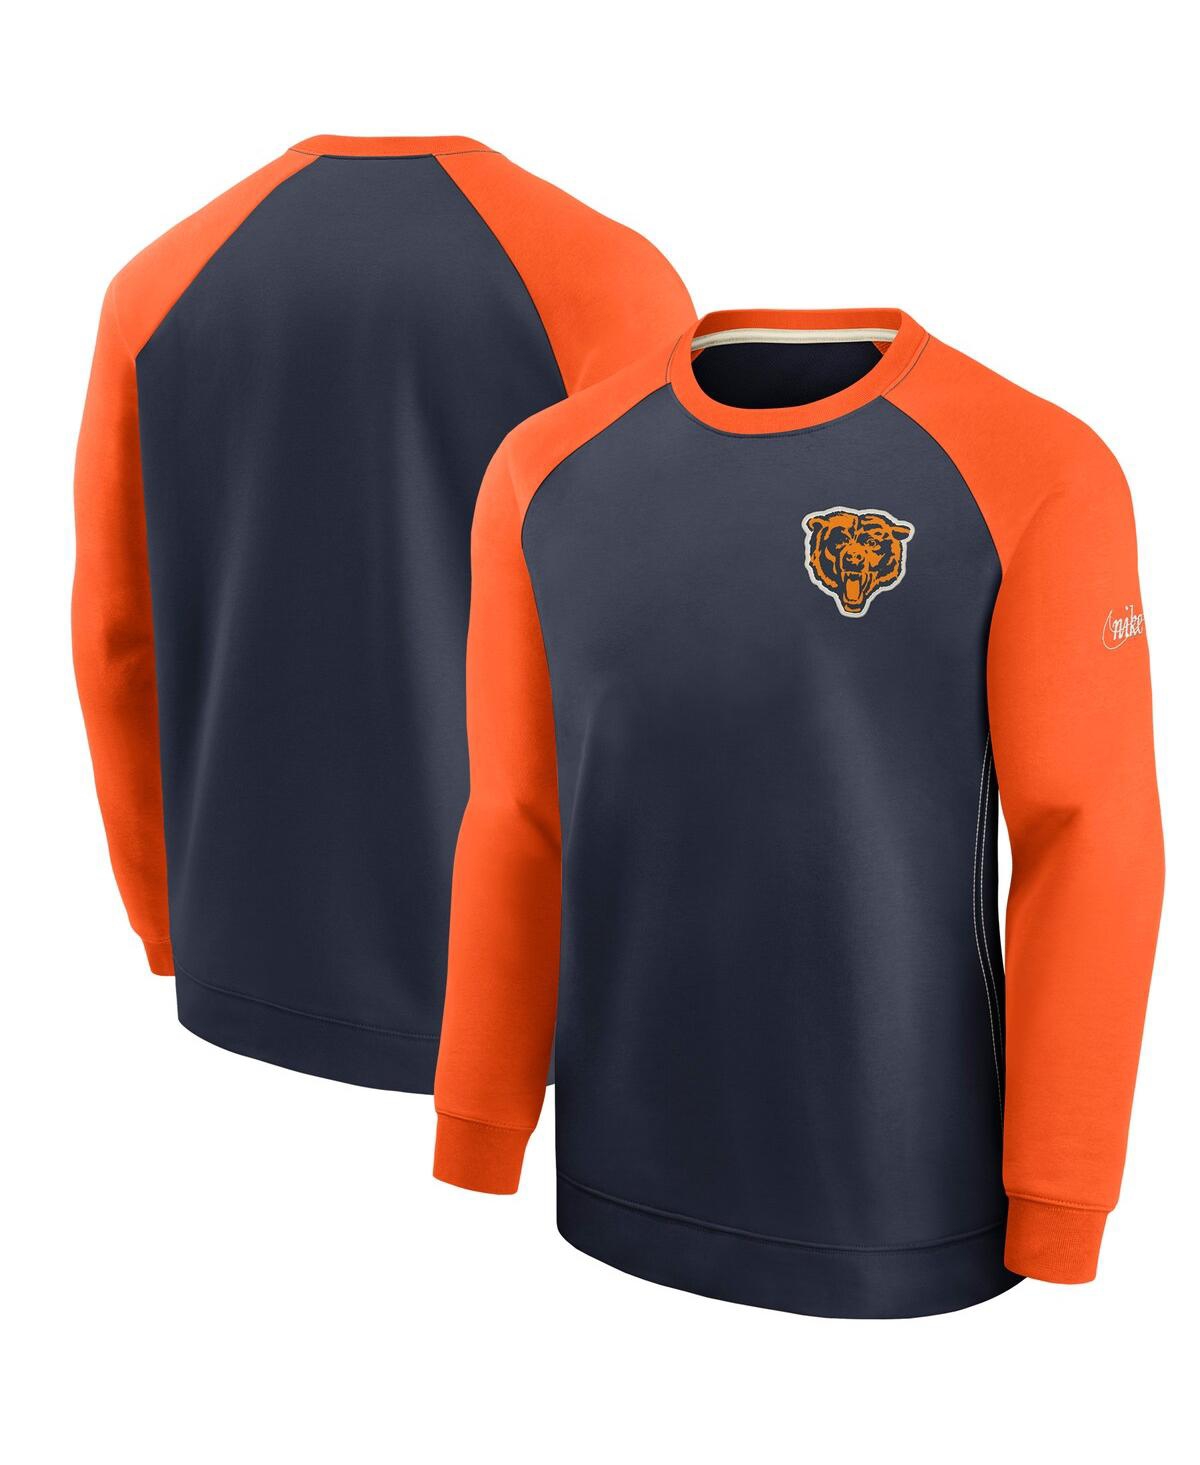 Men's Nike Navy, Orange Chicago Bears Historic Raglan Crew Performance Sweater - Navy, Orange